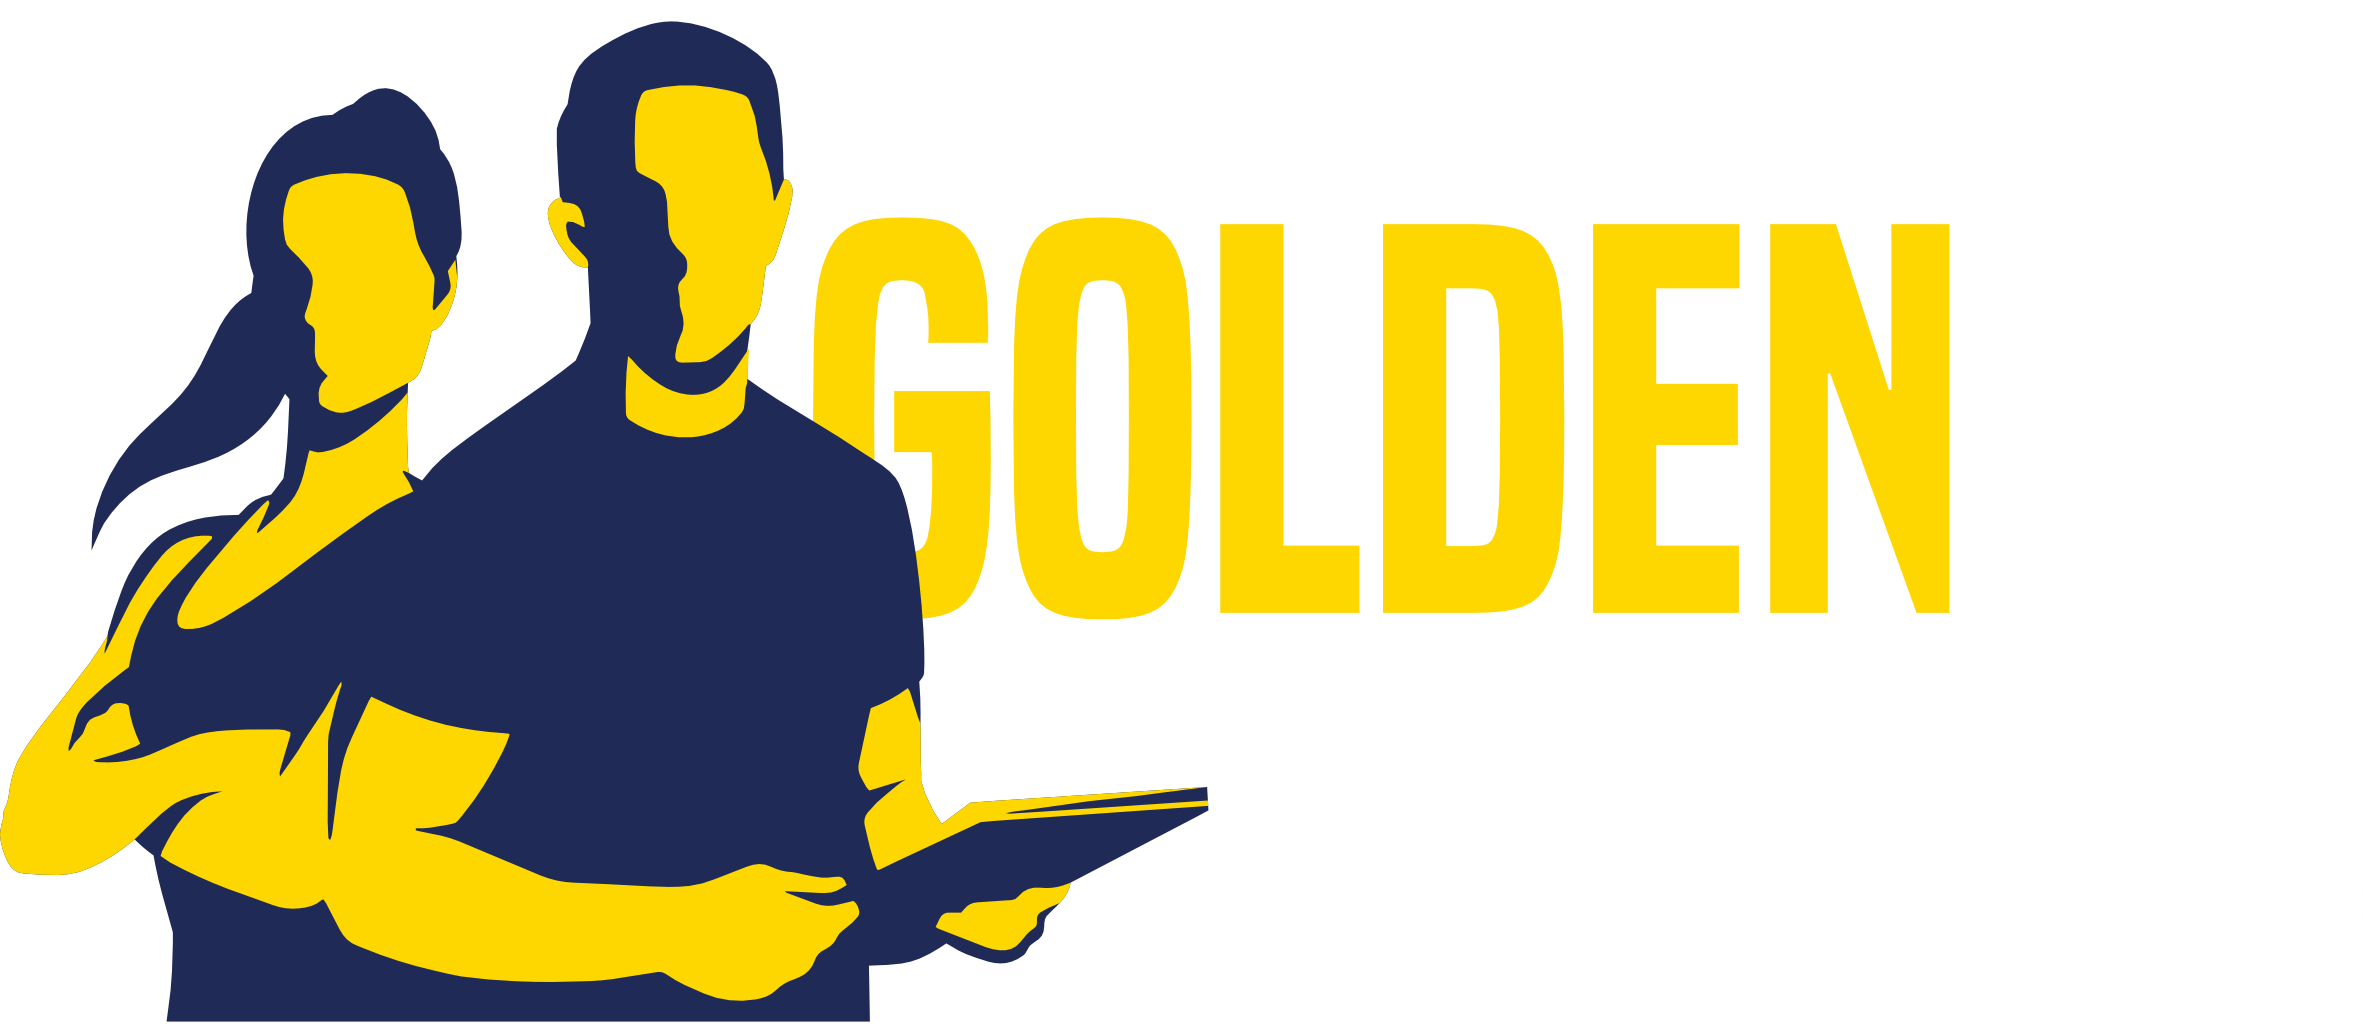 Golden Coaches